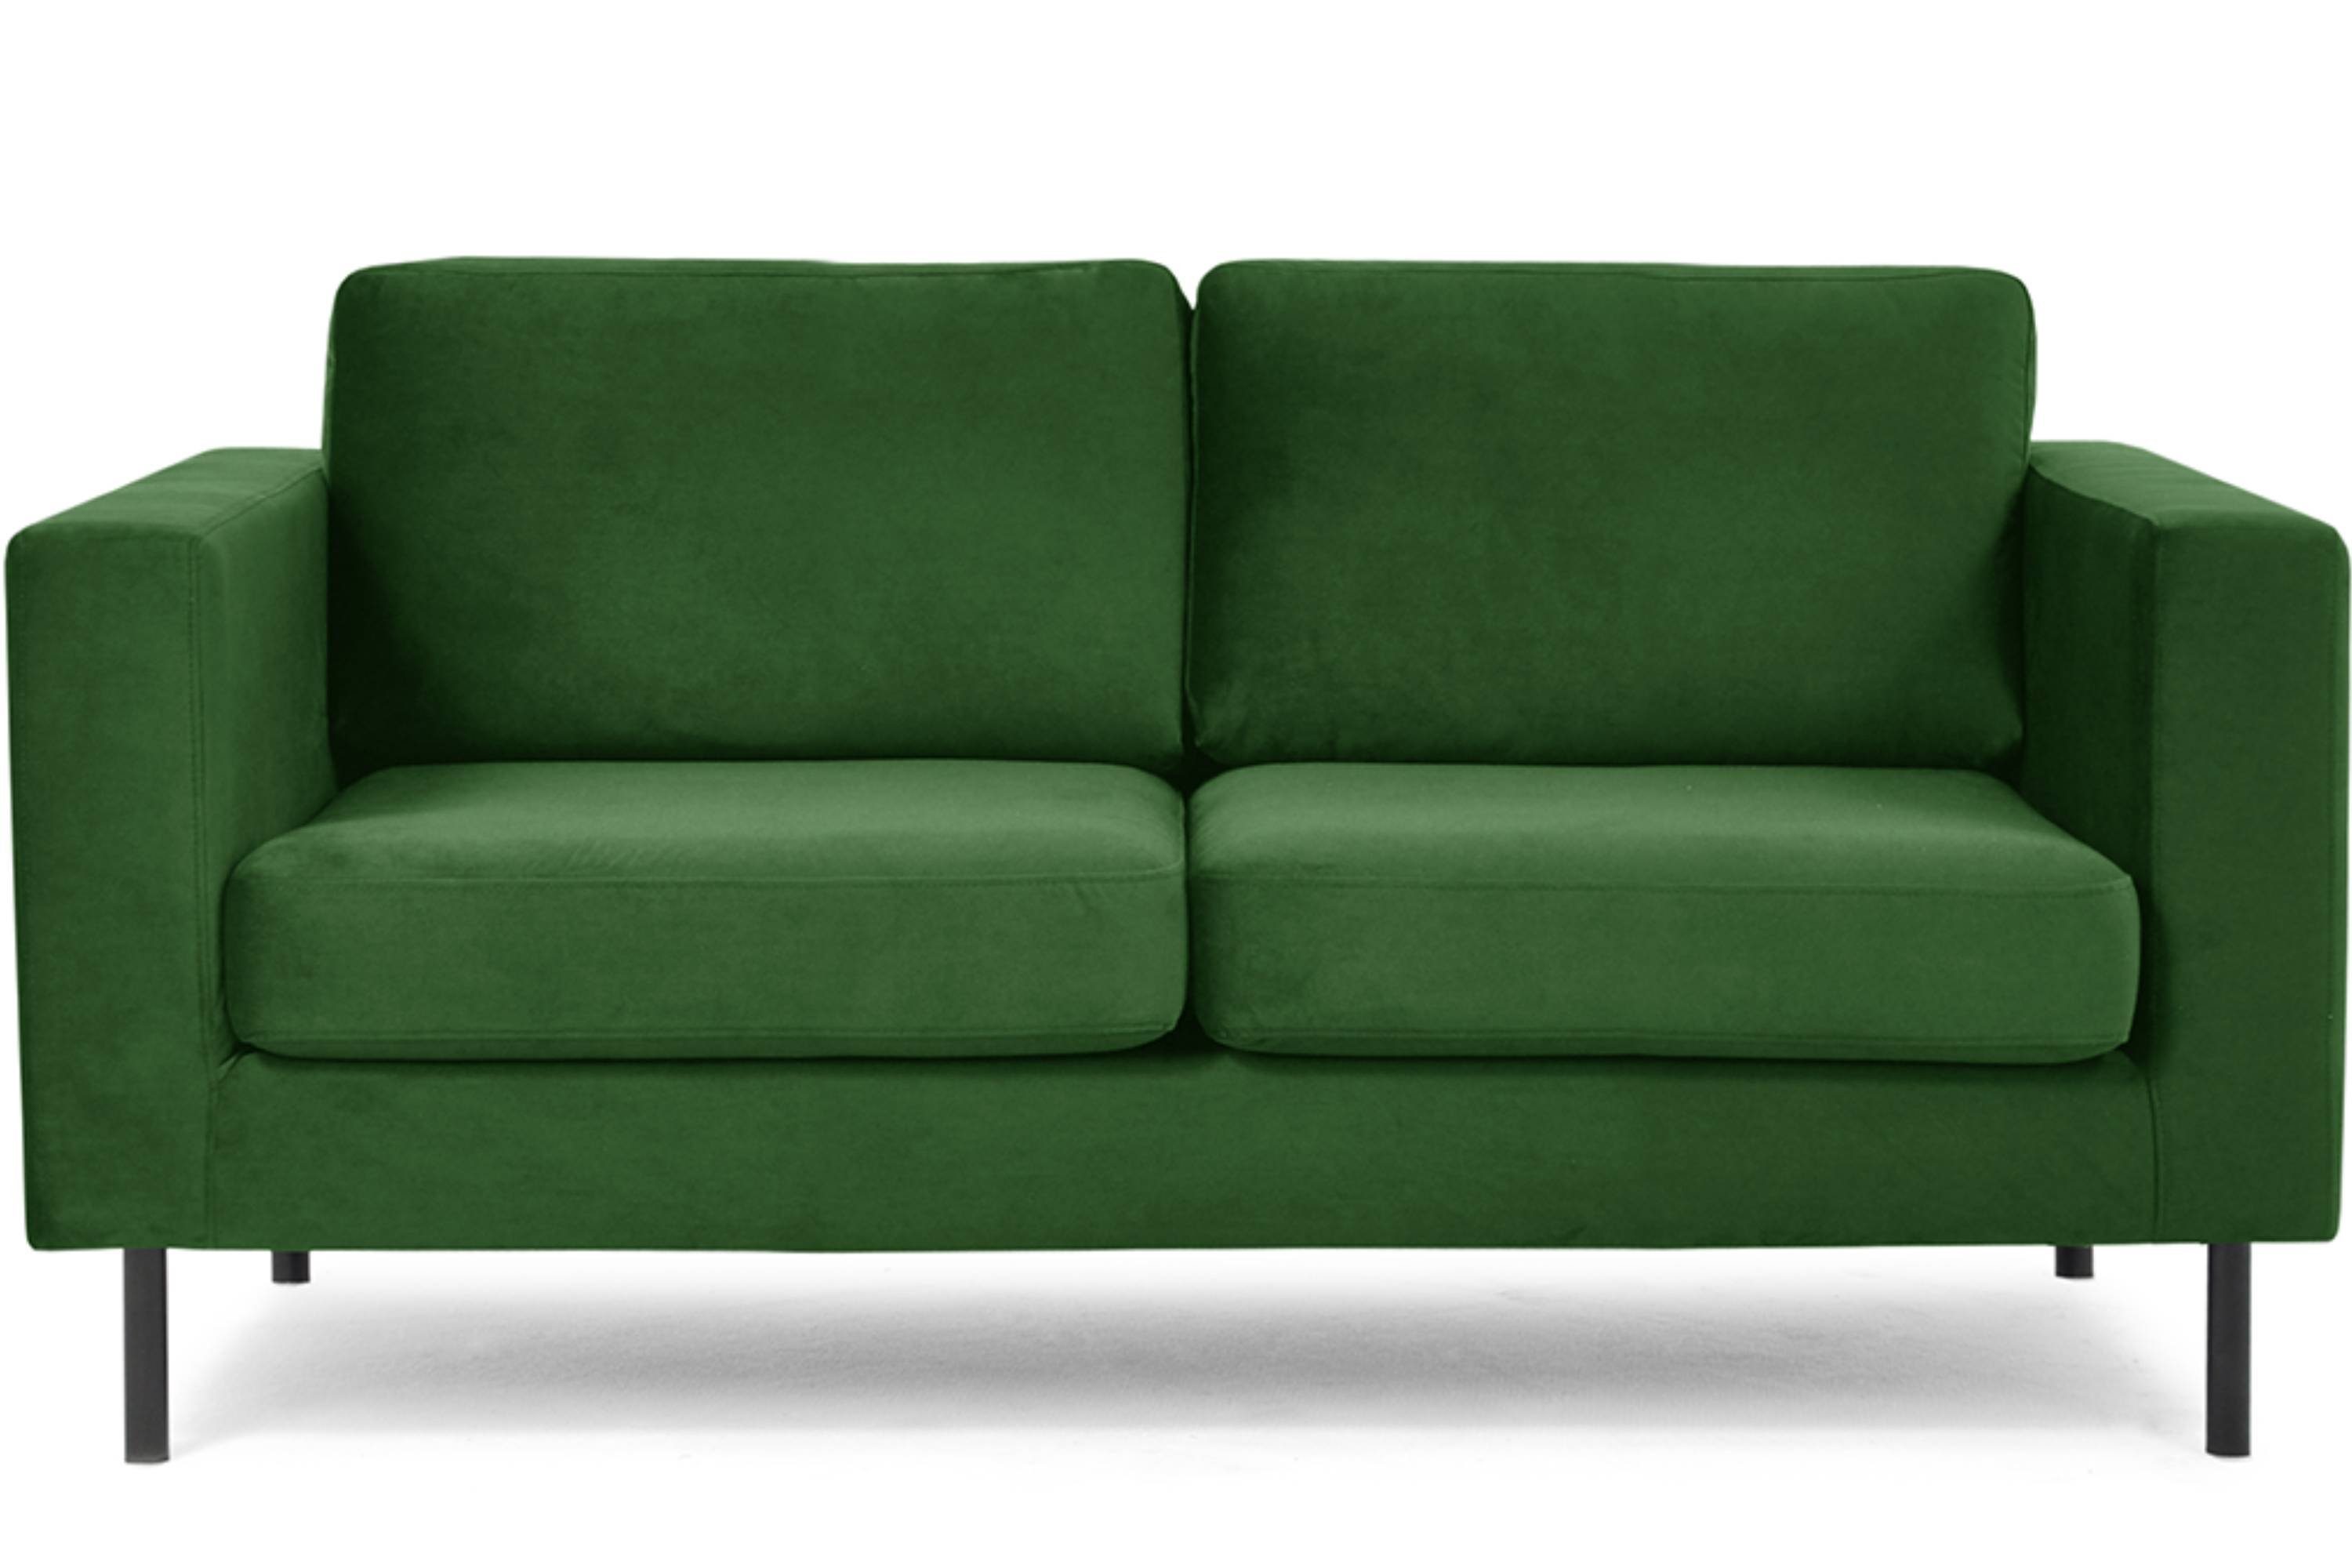 Konsimo | Design 2 grün | 2-Sitzer Beine, Personen, Sofa TOZZI grün grün universelles hohe